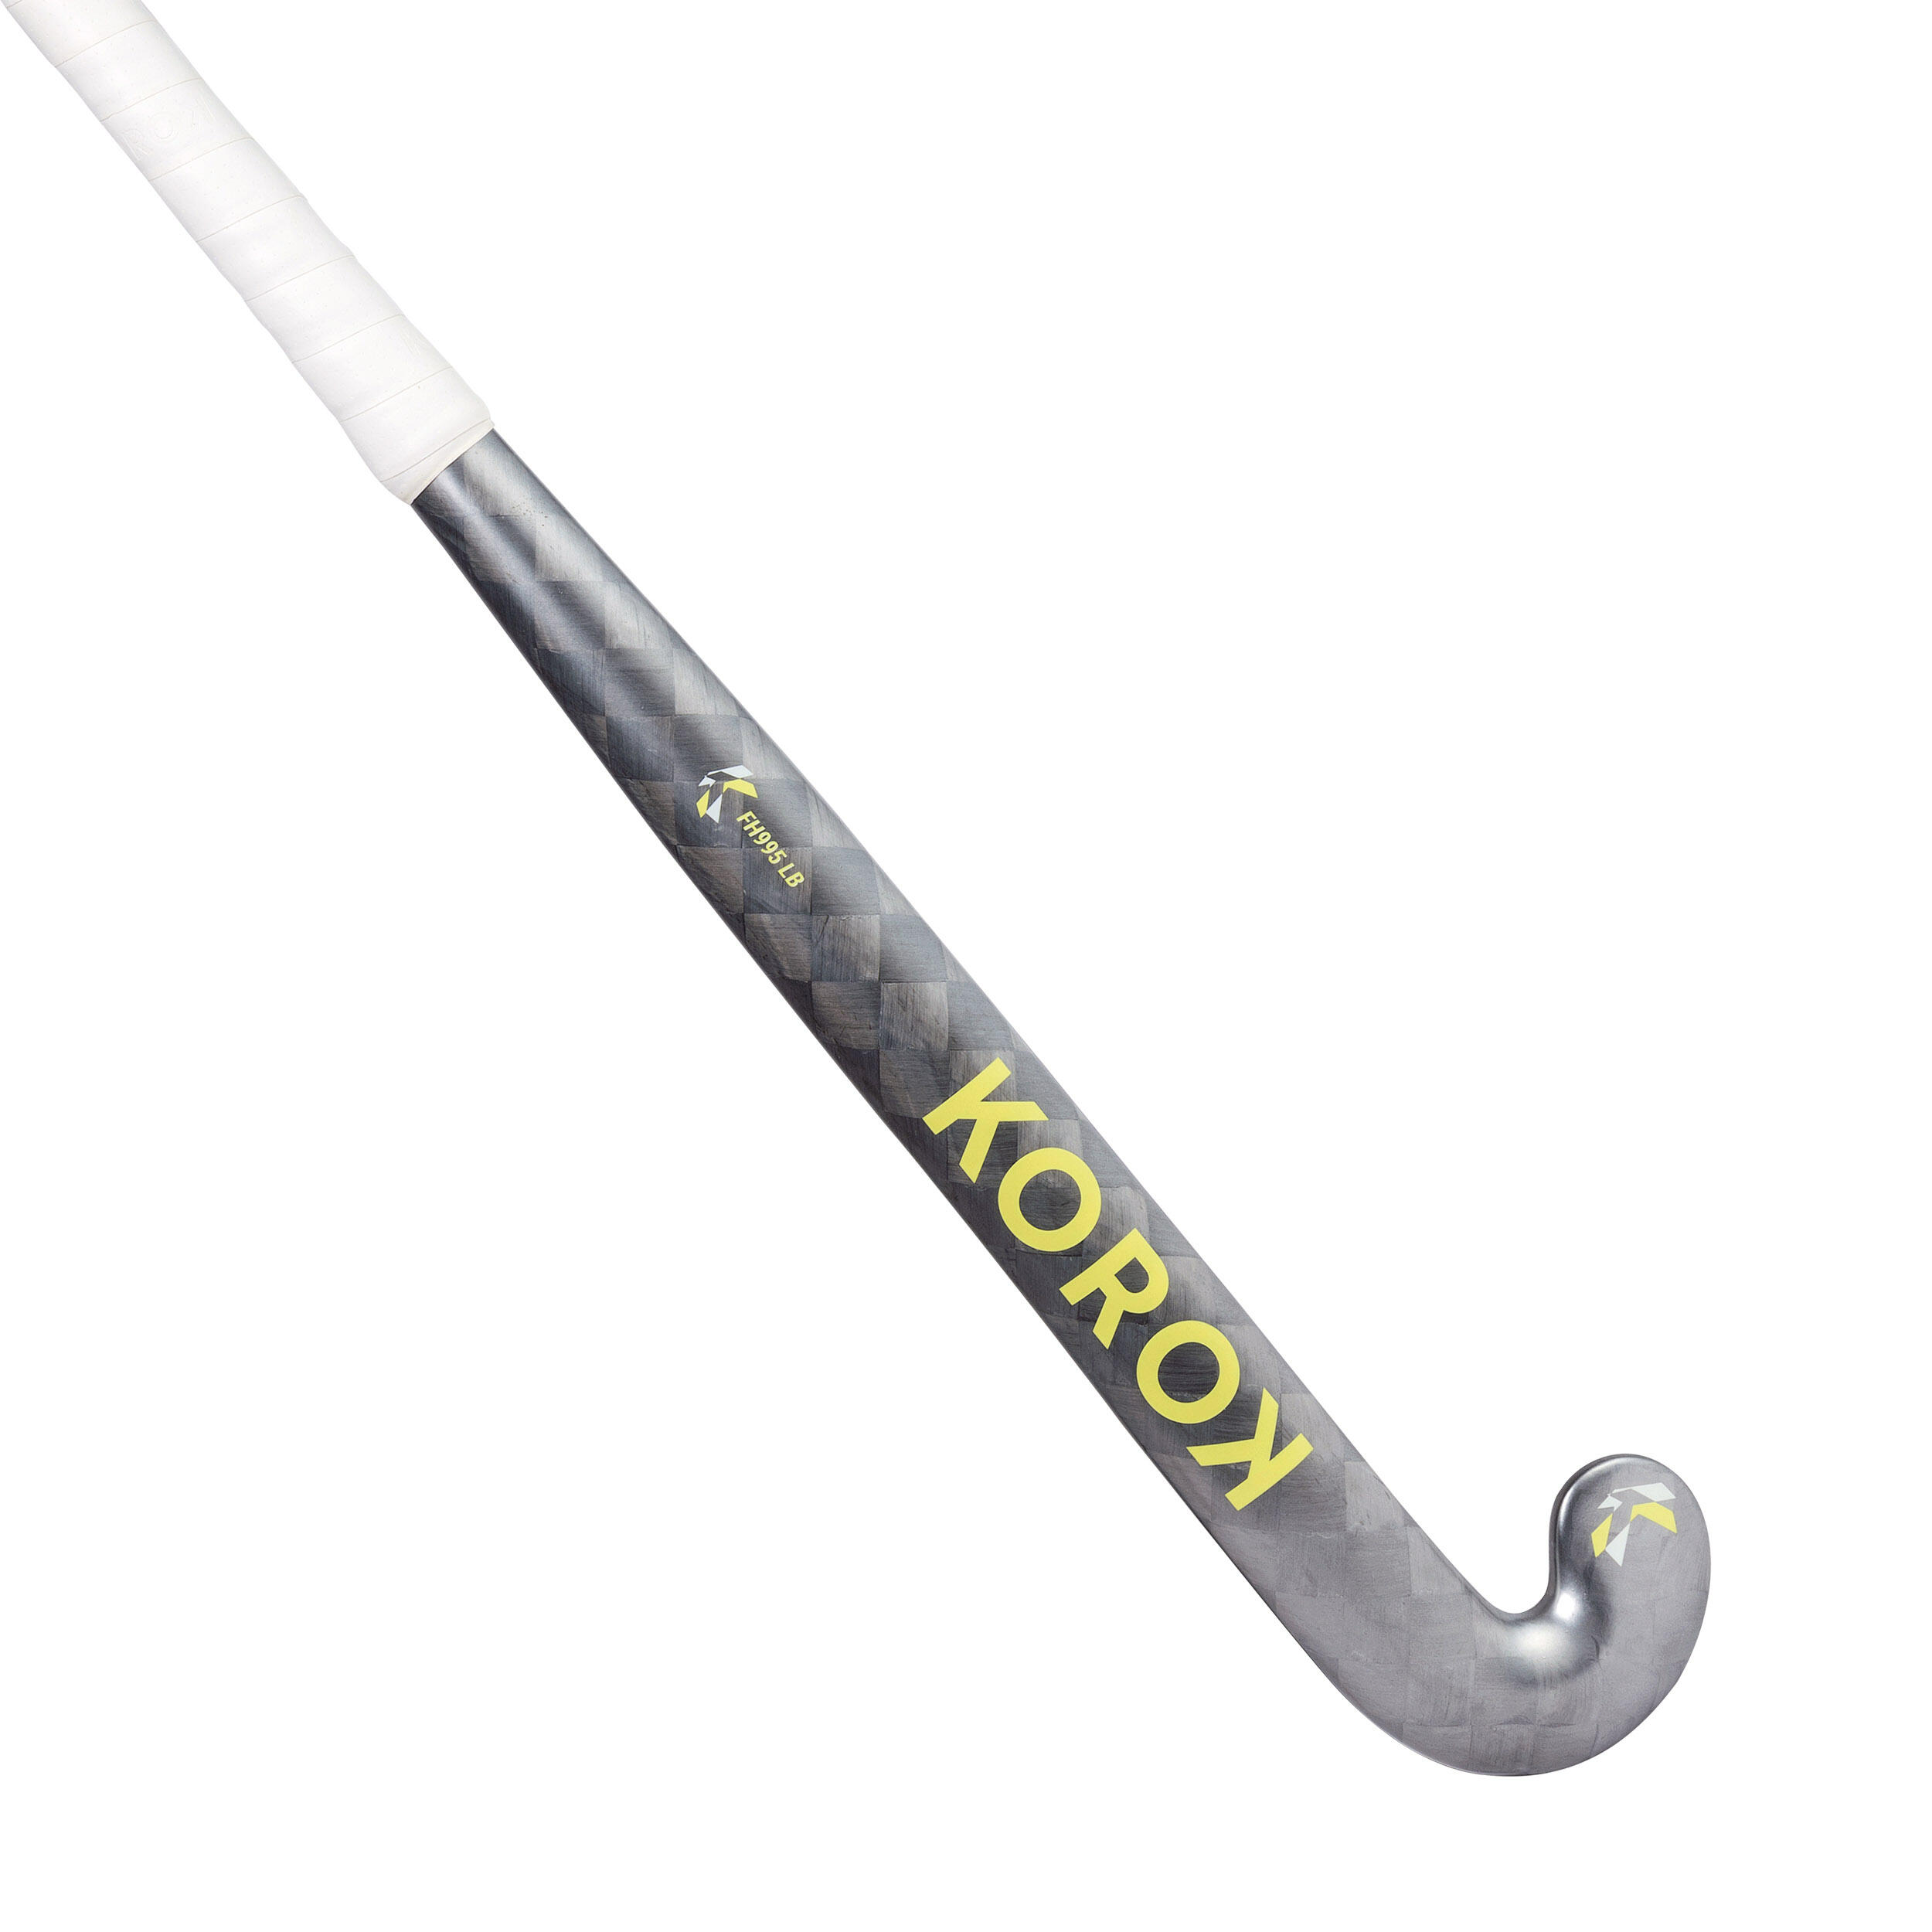 KOROK Adult Advanced 95% Carbon Low Bow Field Hockey Stick FH995 - Grey/Yellow